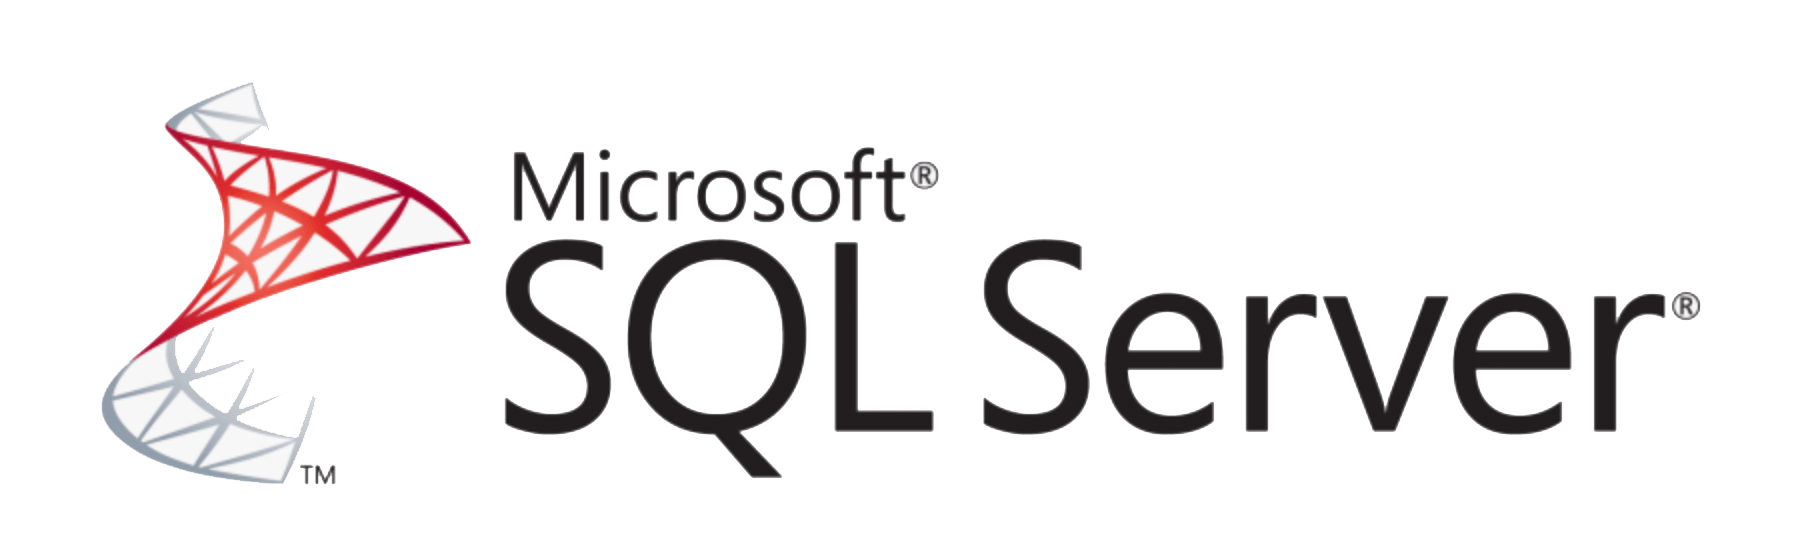 SQL Server 徽标